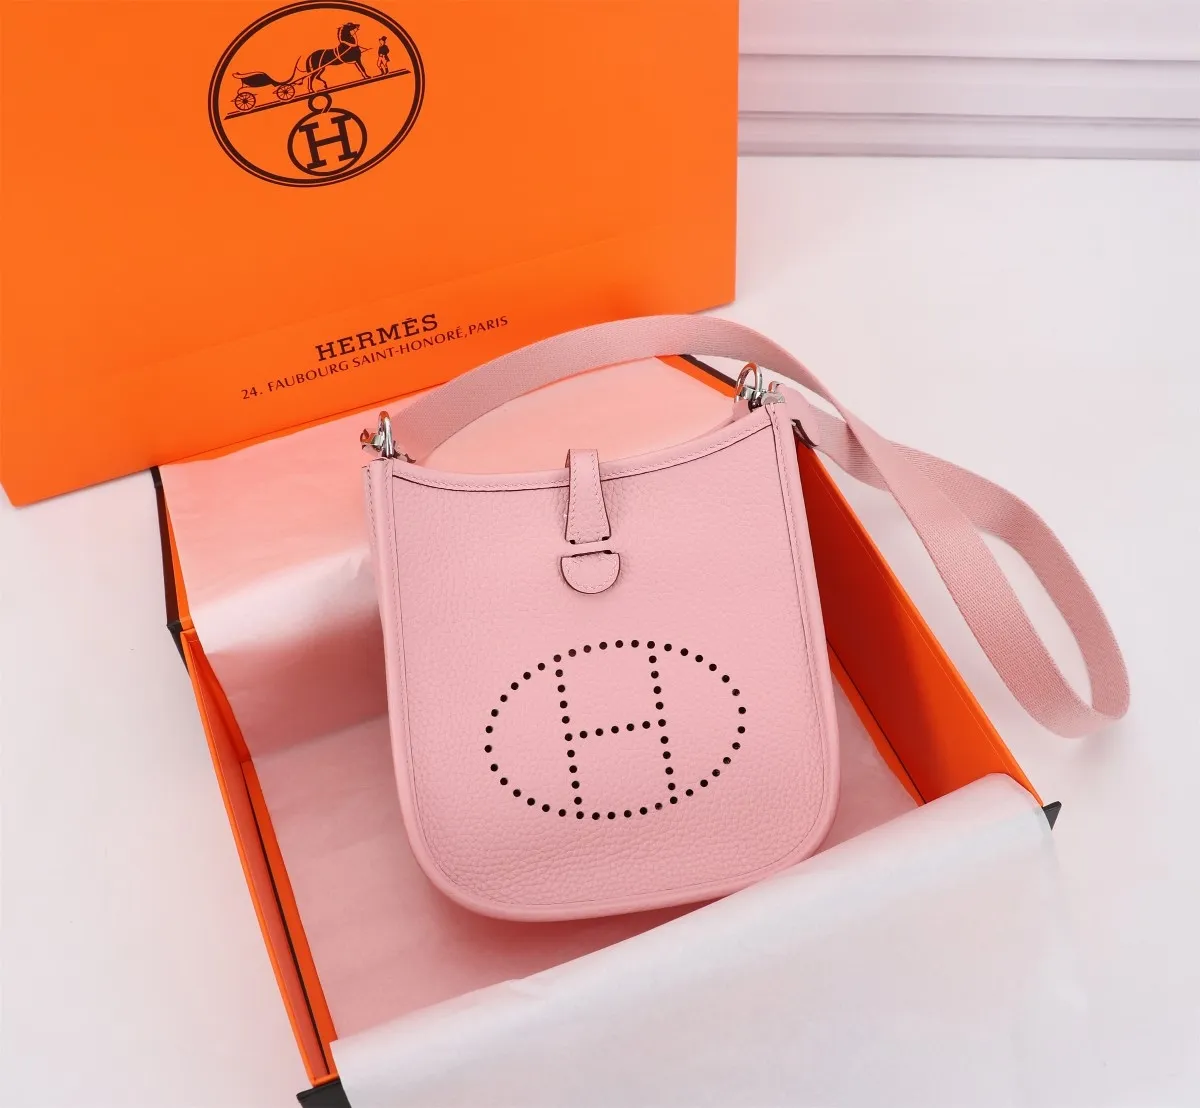 Hermès Evelyne Handbag #hermes #hermesevelyne #influencerhandbag